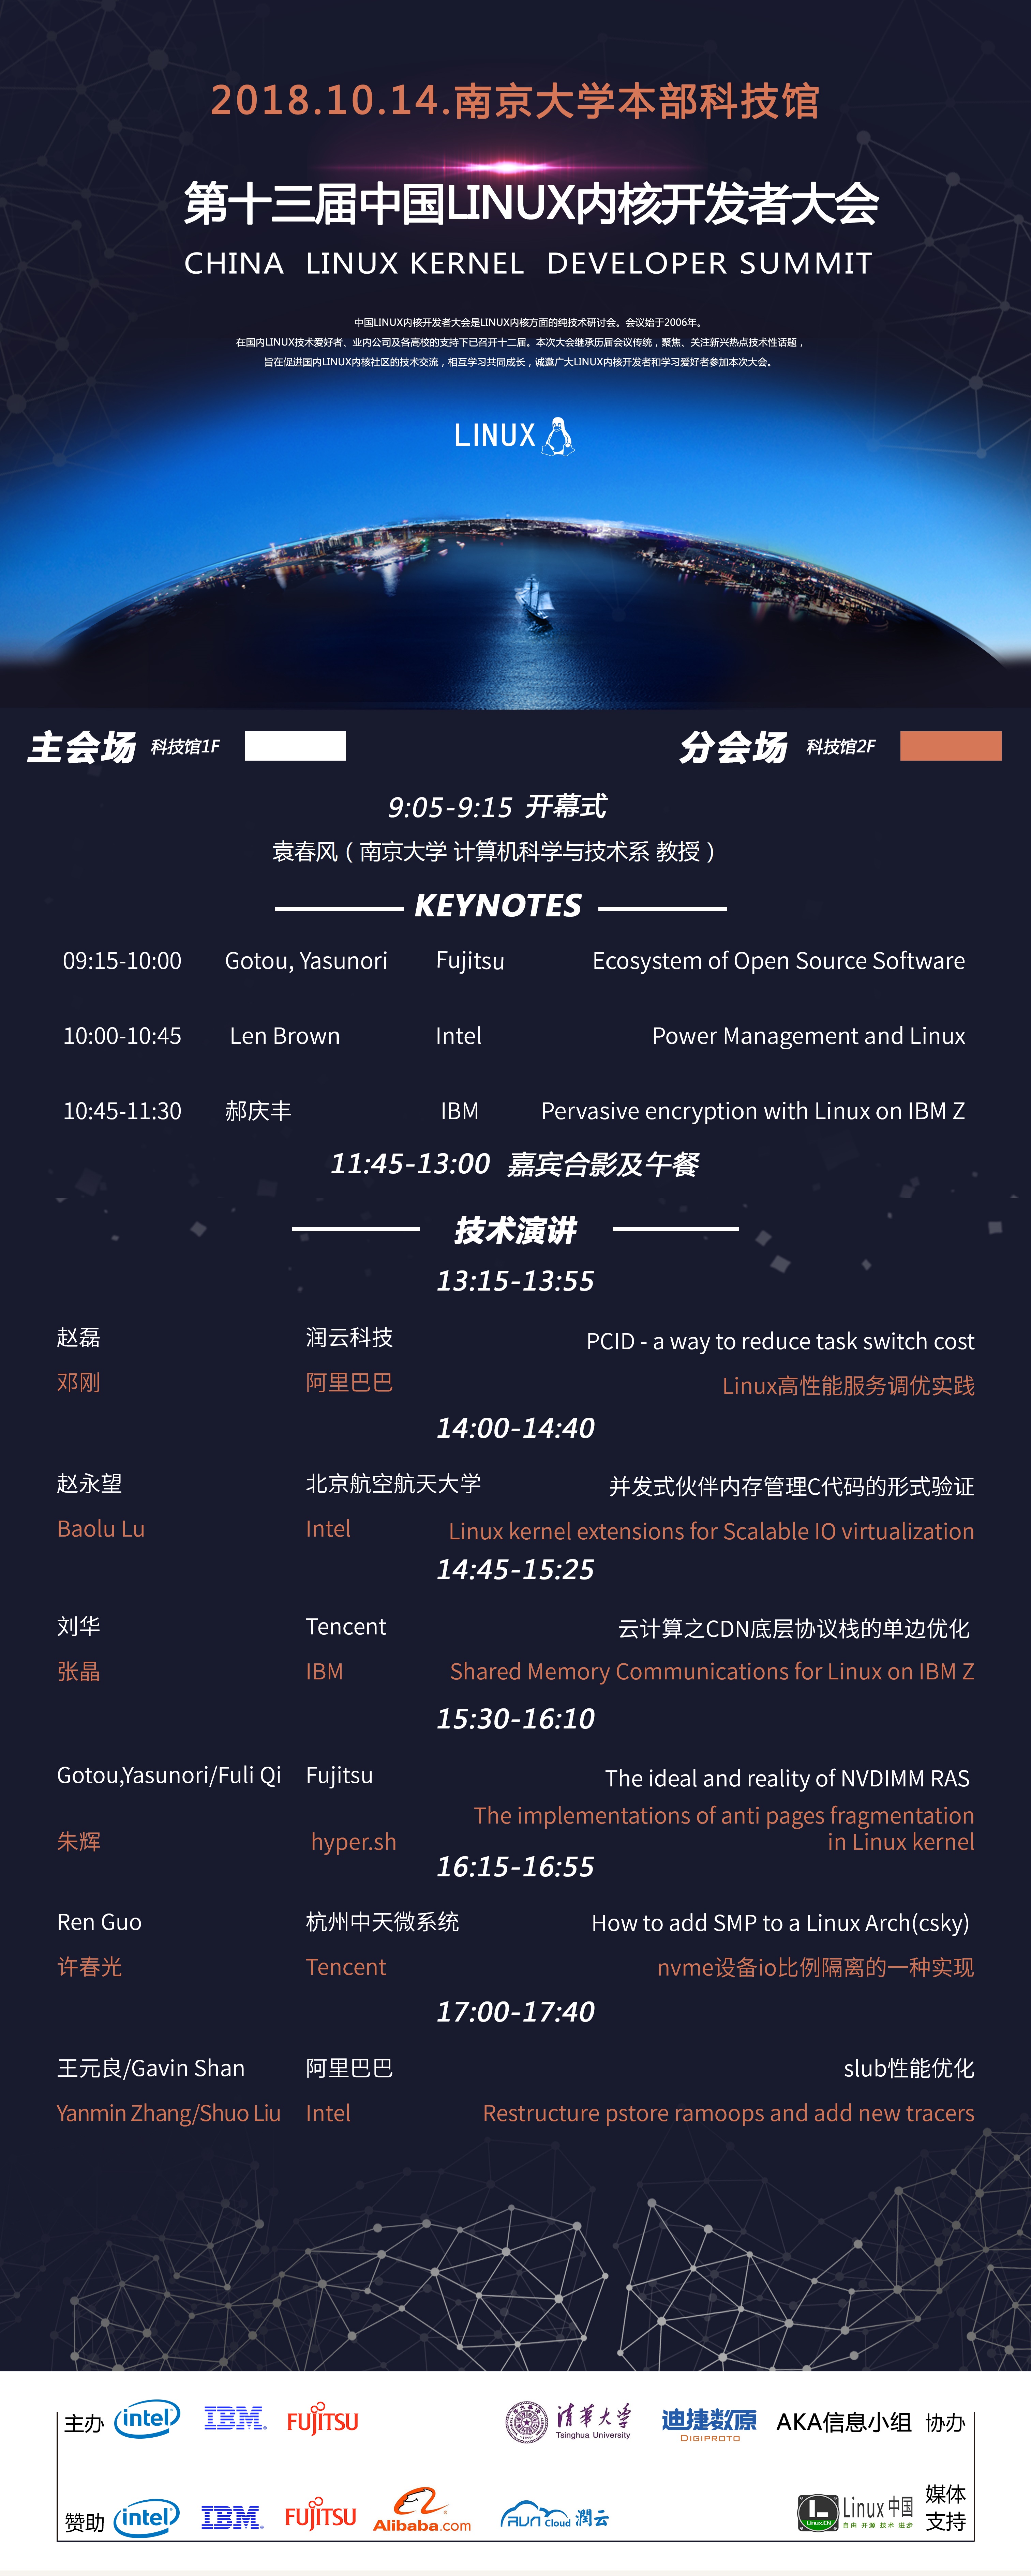 CLK2018 Schedule